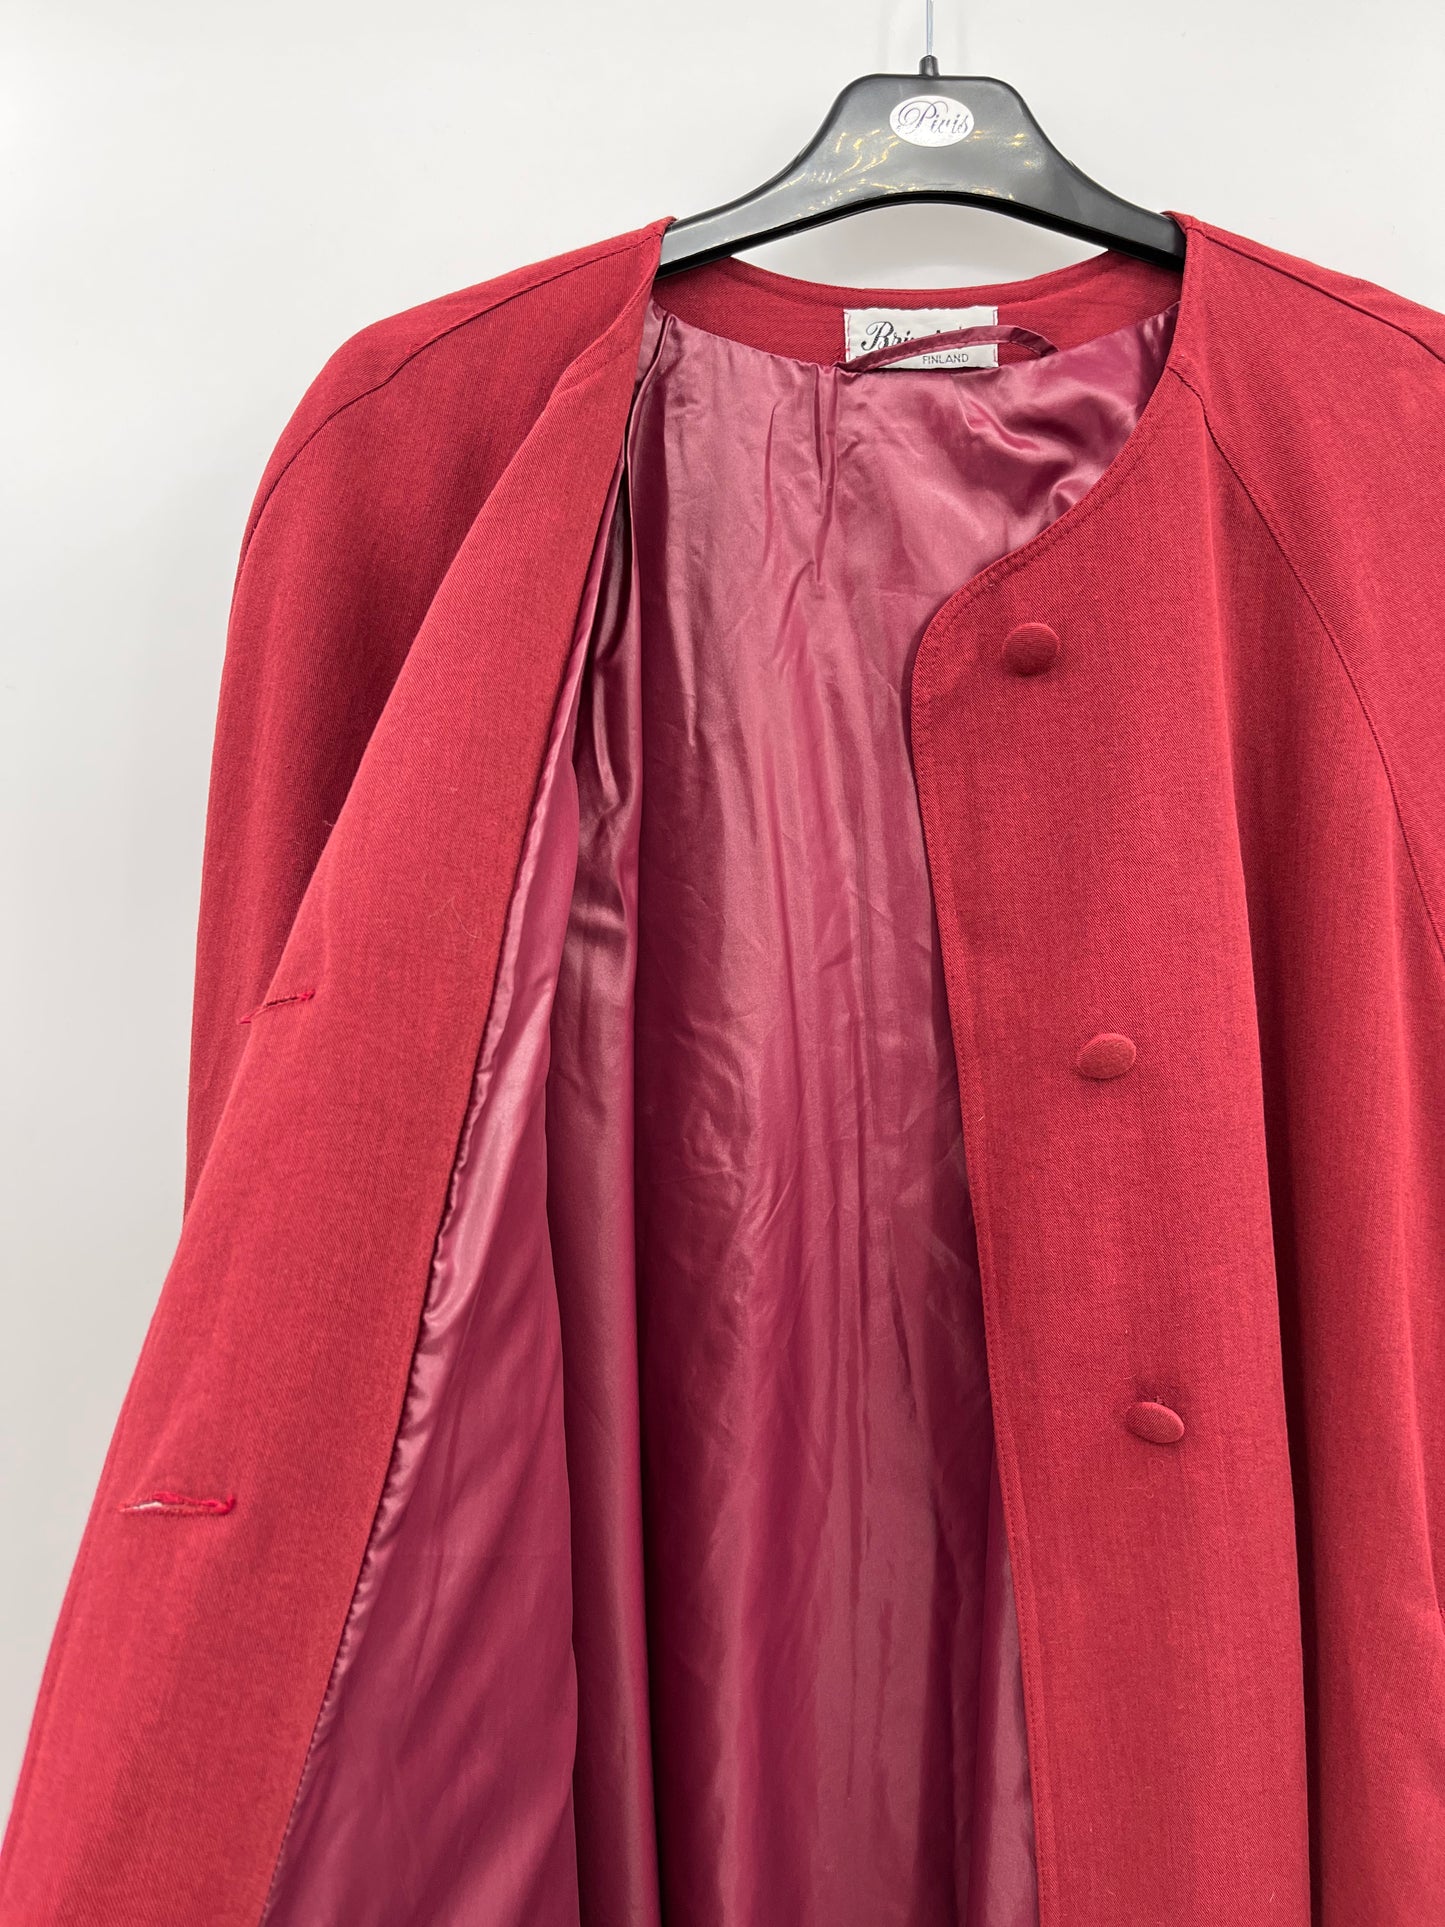 Brivatar, tummanpunainen takki, 2000-luku, koko 42